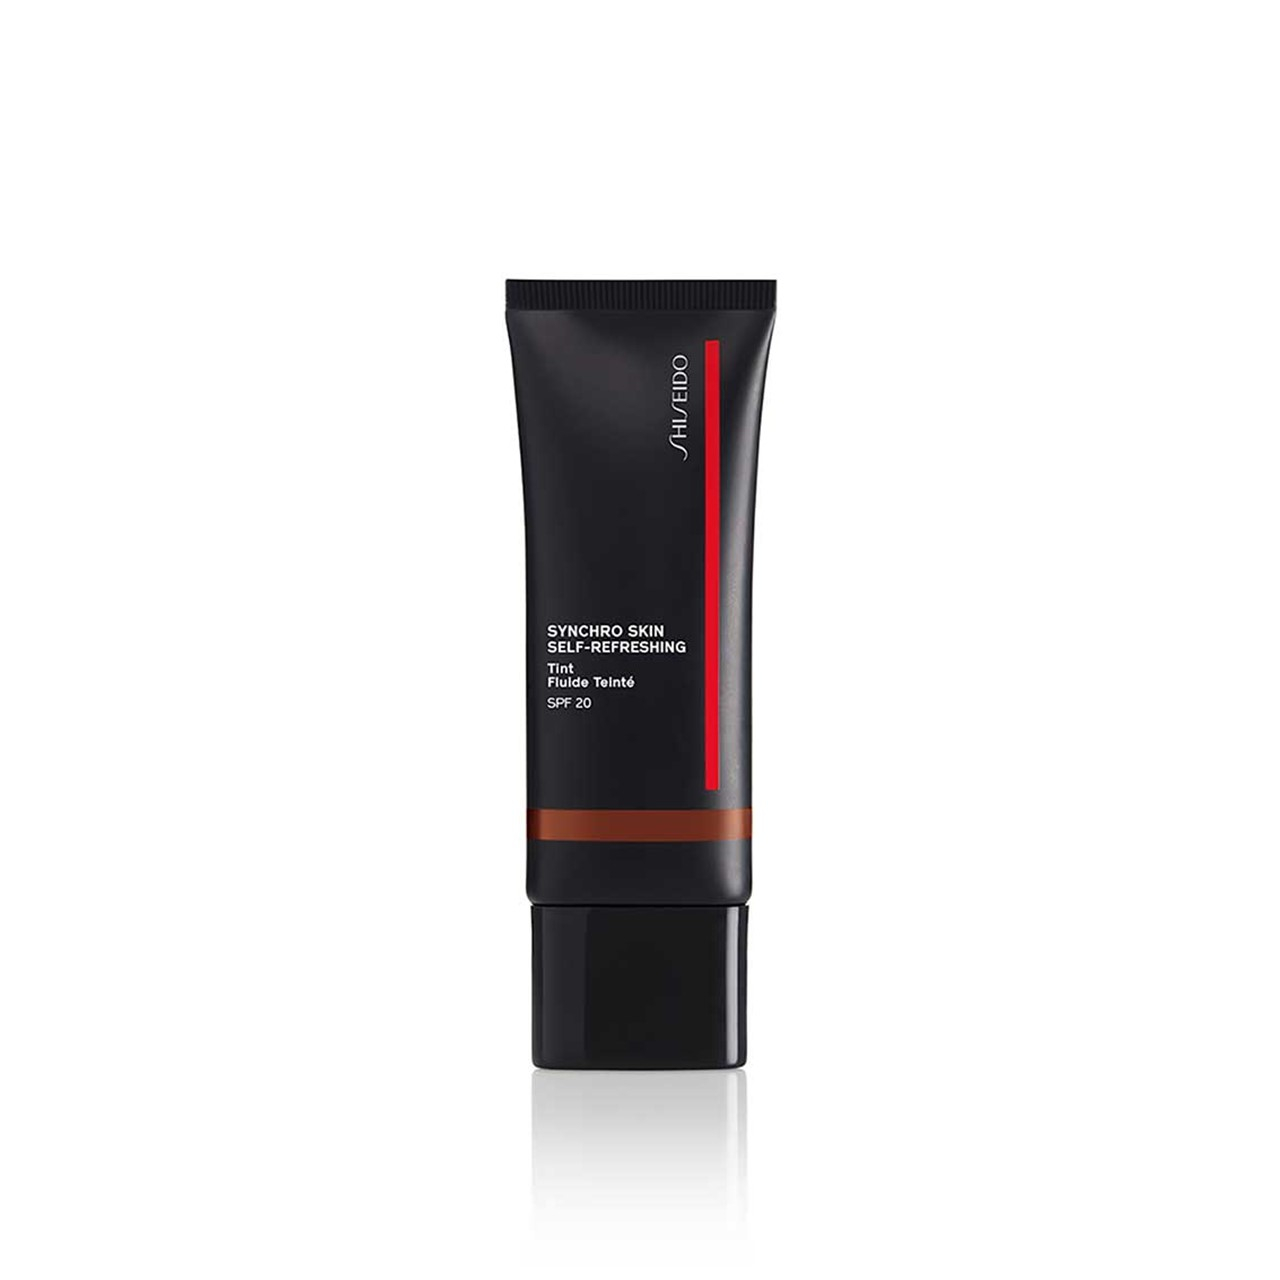 Shiseido Synchro Skin Self-Refreshing Tint SPF20 525 Deep Kuromoji 30ml (1.01fl oz)